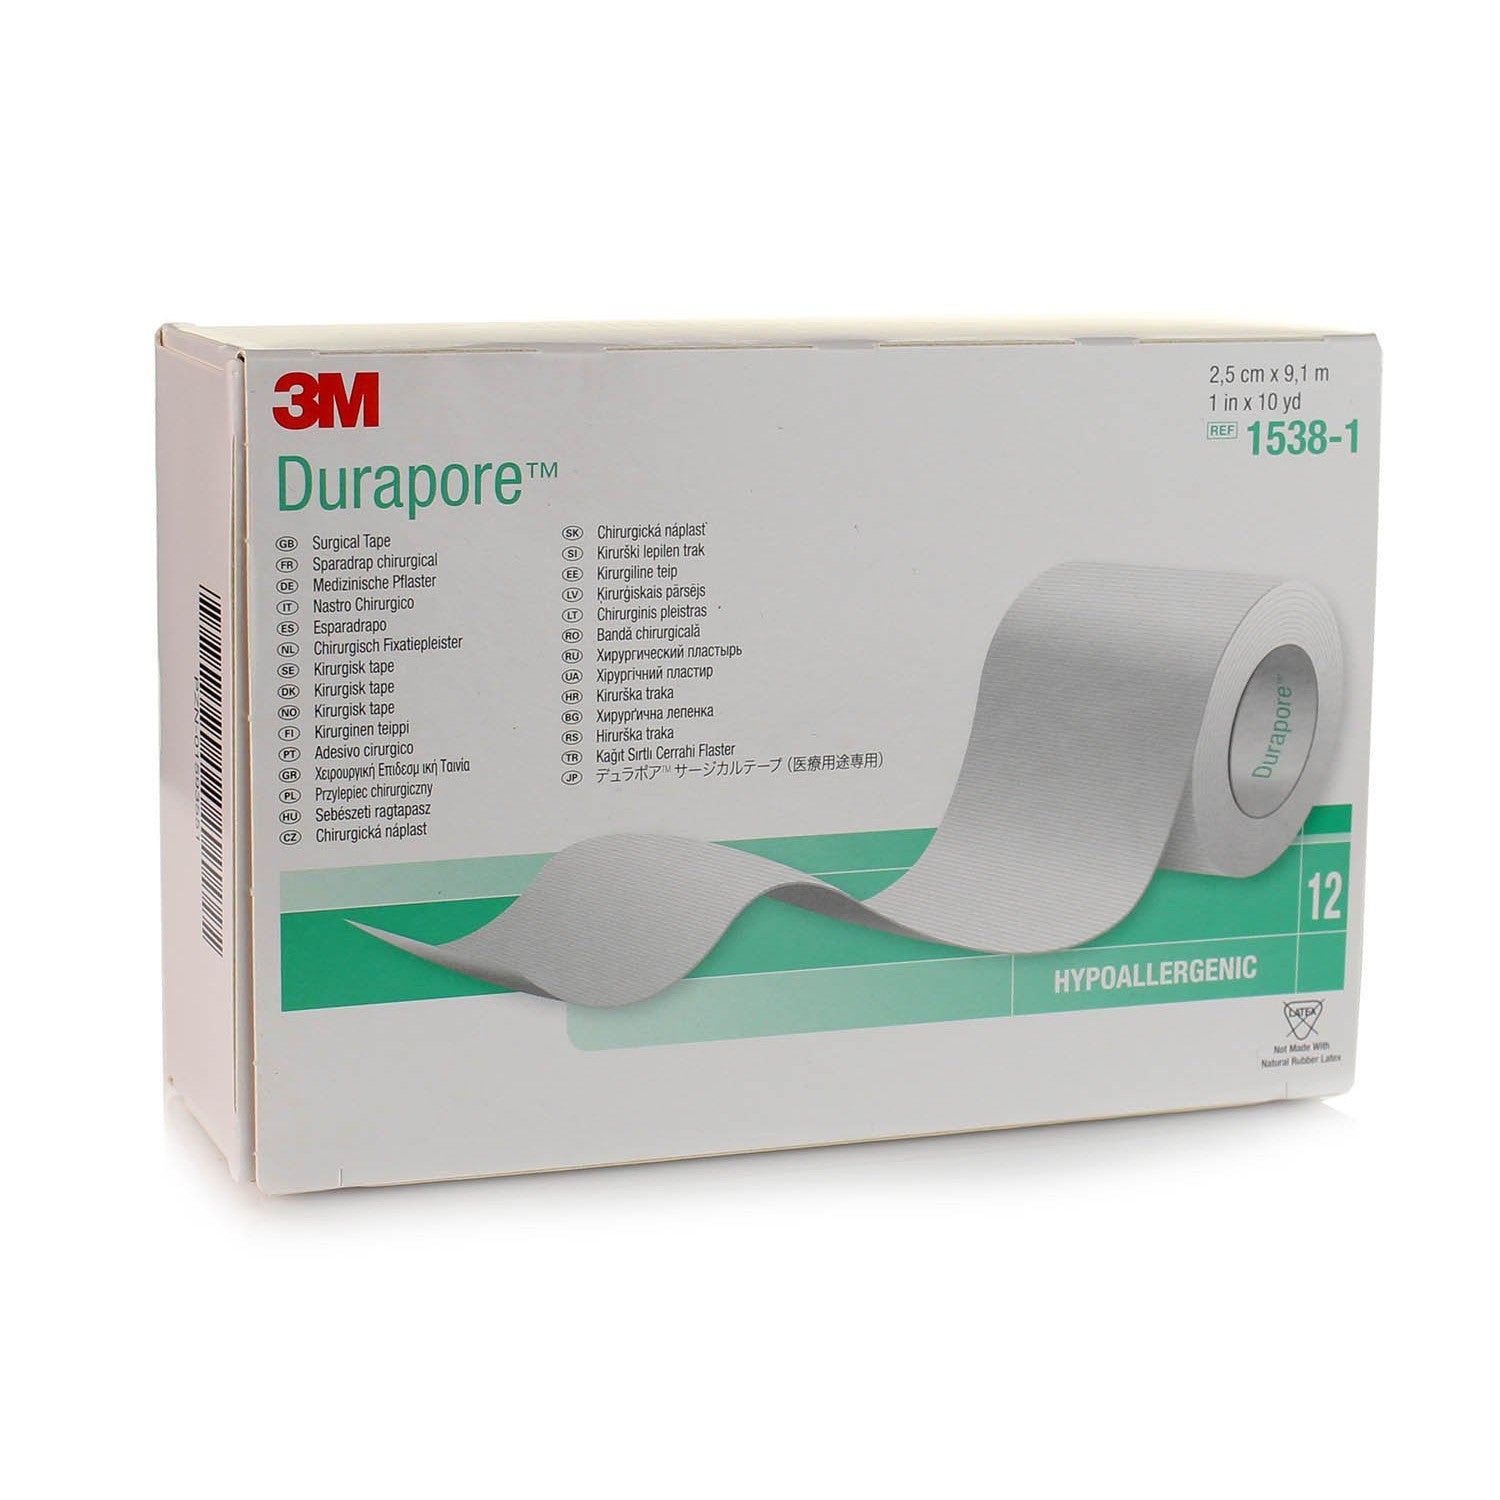 3M Durapore Surgical Cloth Tape - 2 x 10 yds